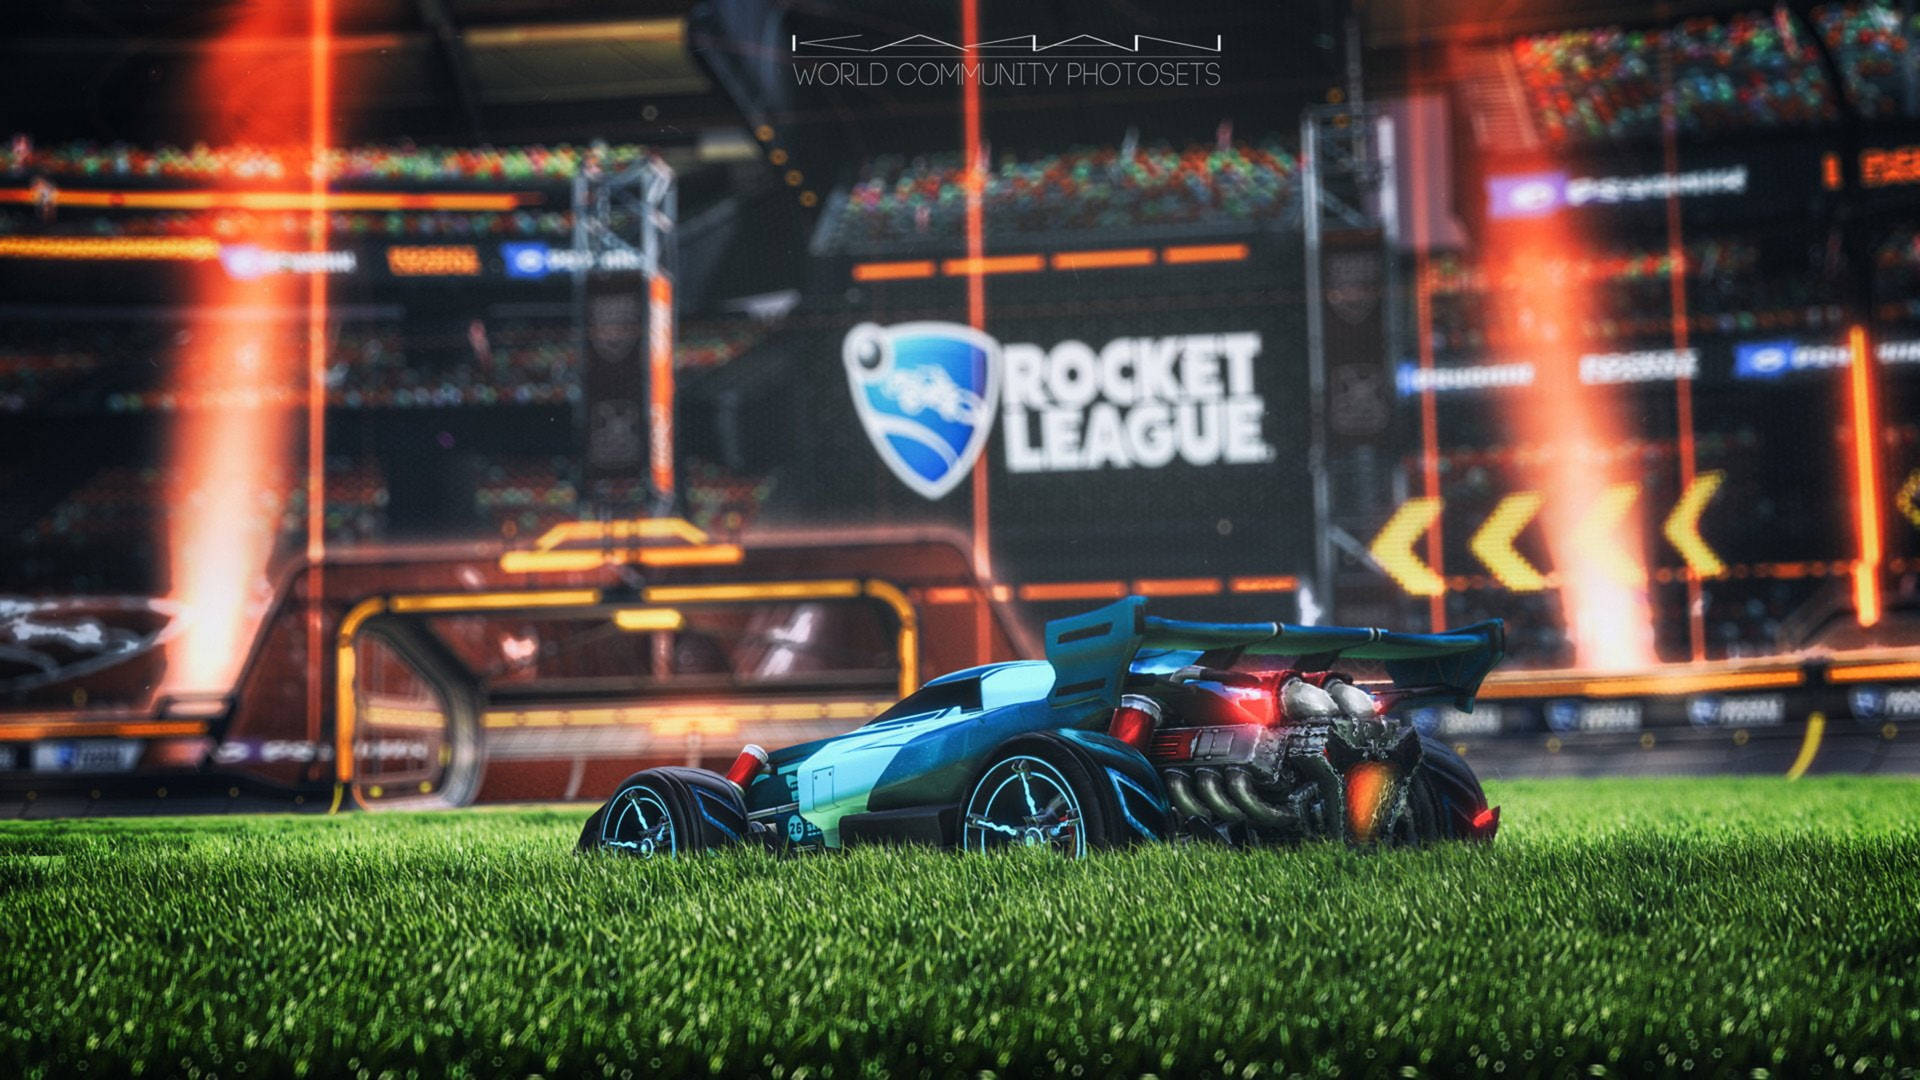 Rocket League Hd Car On Grass Background